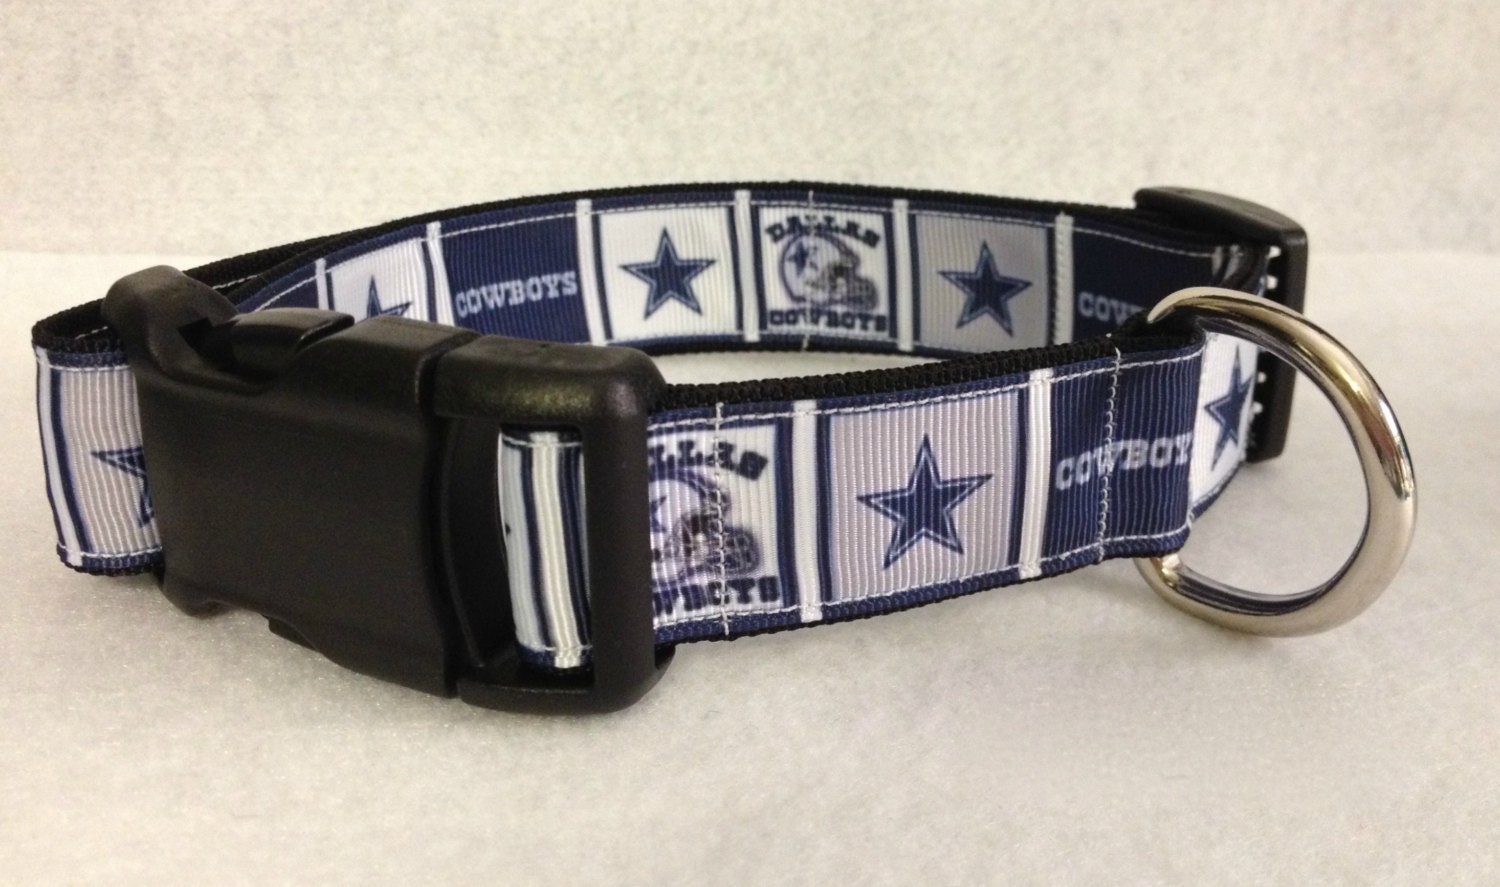 Dallas Cowboys Dog Collar by lincolnlabel on Etsy